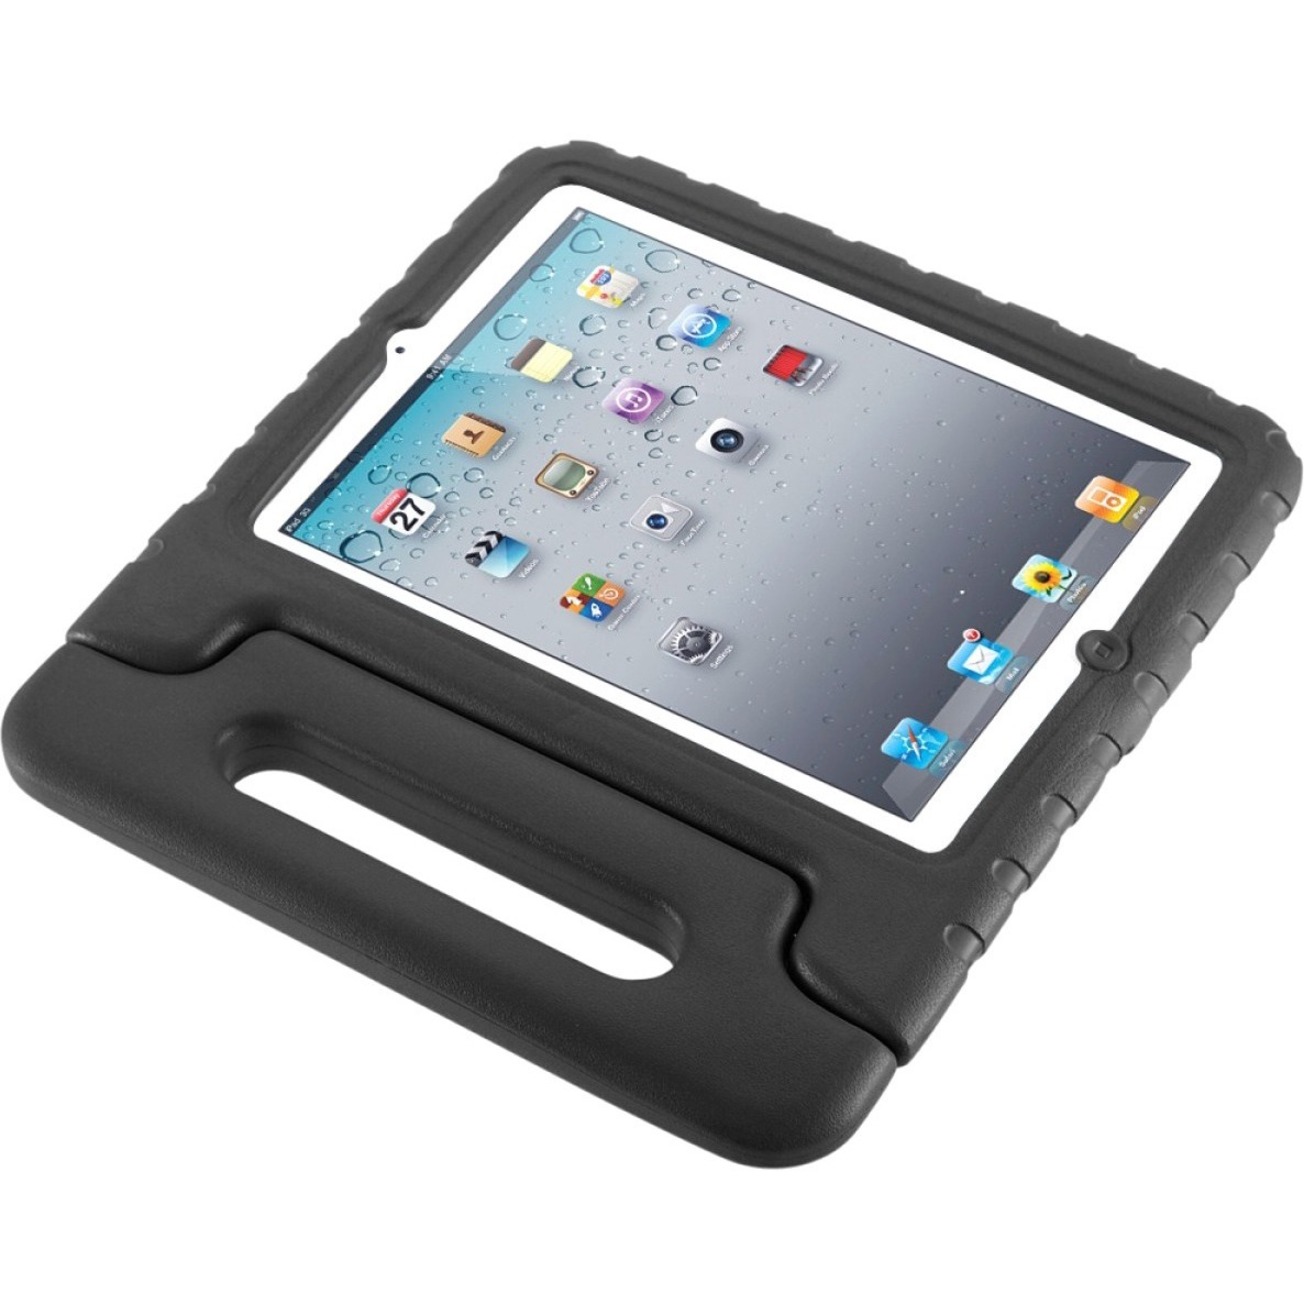 i-Blason Carrying Case Apple iPad 2, iPad (3rd Generation), iPad (4th Generation) Tablet, Black - image 5 of 5